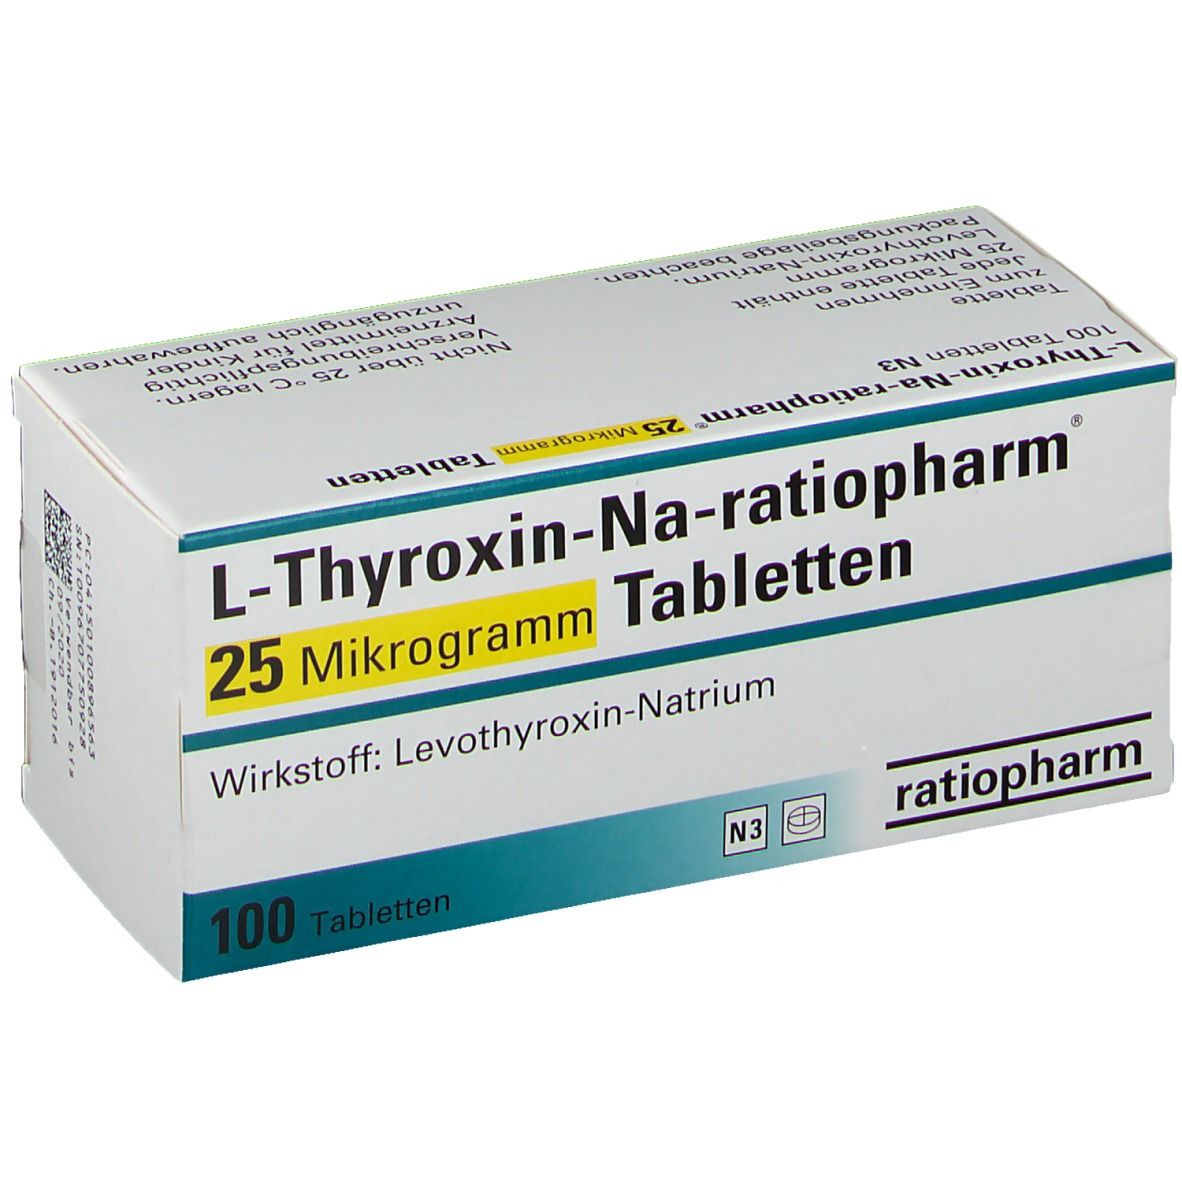 L-Thyroxin-Na-ratiopharm ® 25 Mikrogramm.